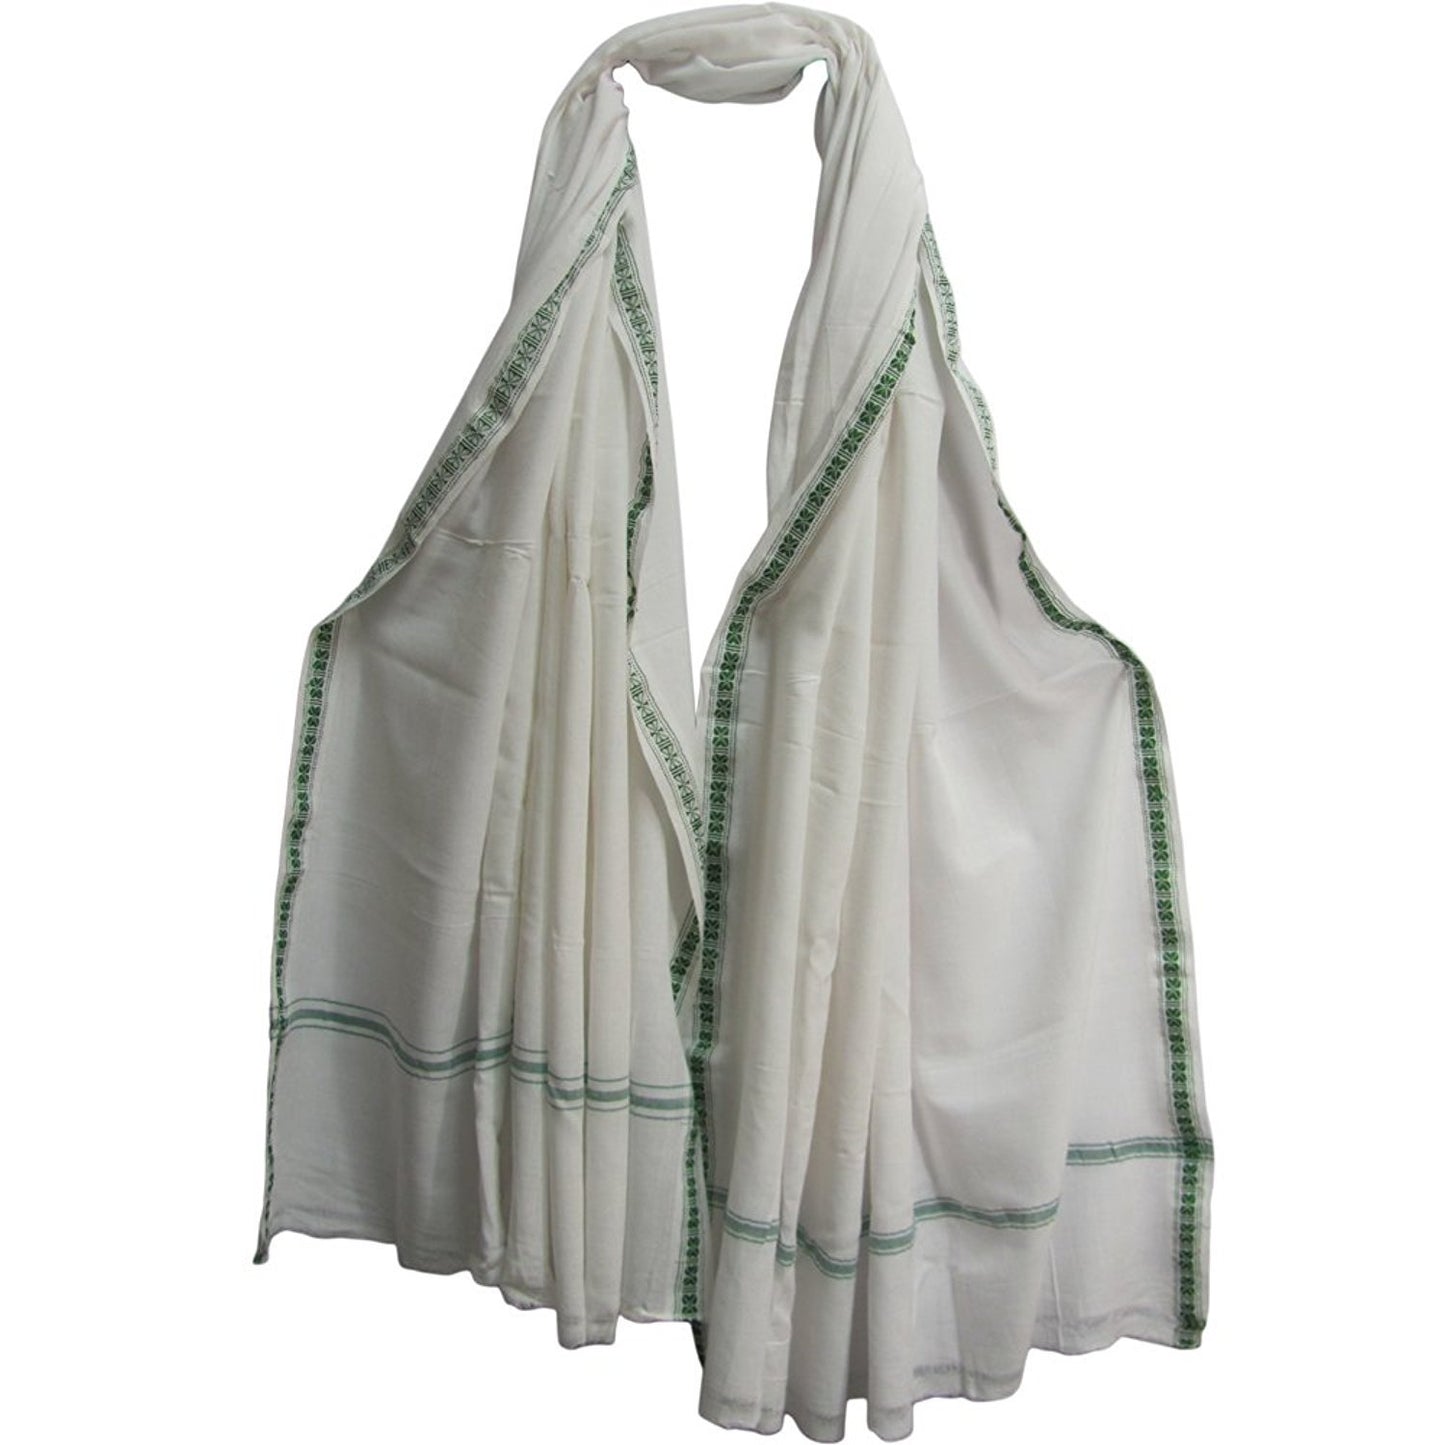 Indian Yoga Meditation White Cotton Scarf Shawl Wrap (47" x 90") - Ambali Fashion Cotton Scarves accessory, bohemian, boho, casual, classic, ethnic, gypsy, hippie, meditation, new age, shawl,